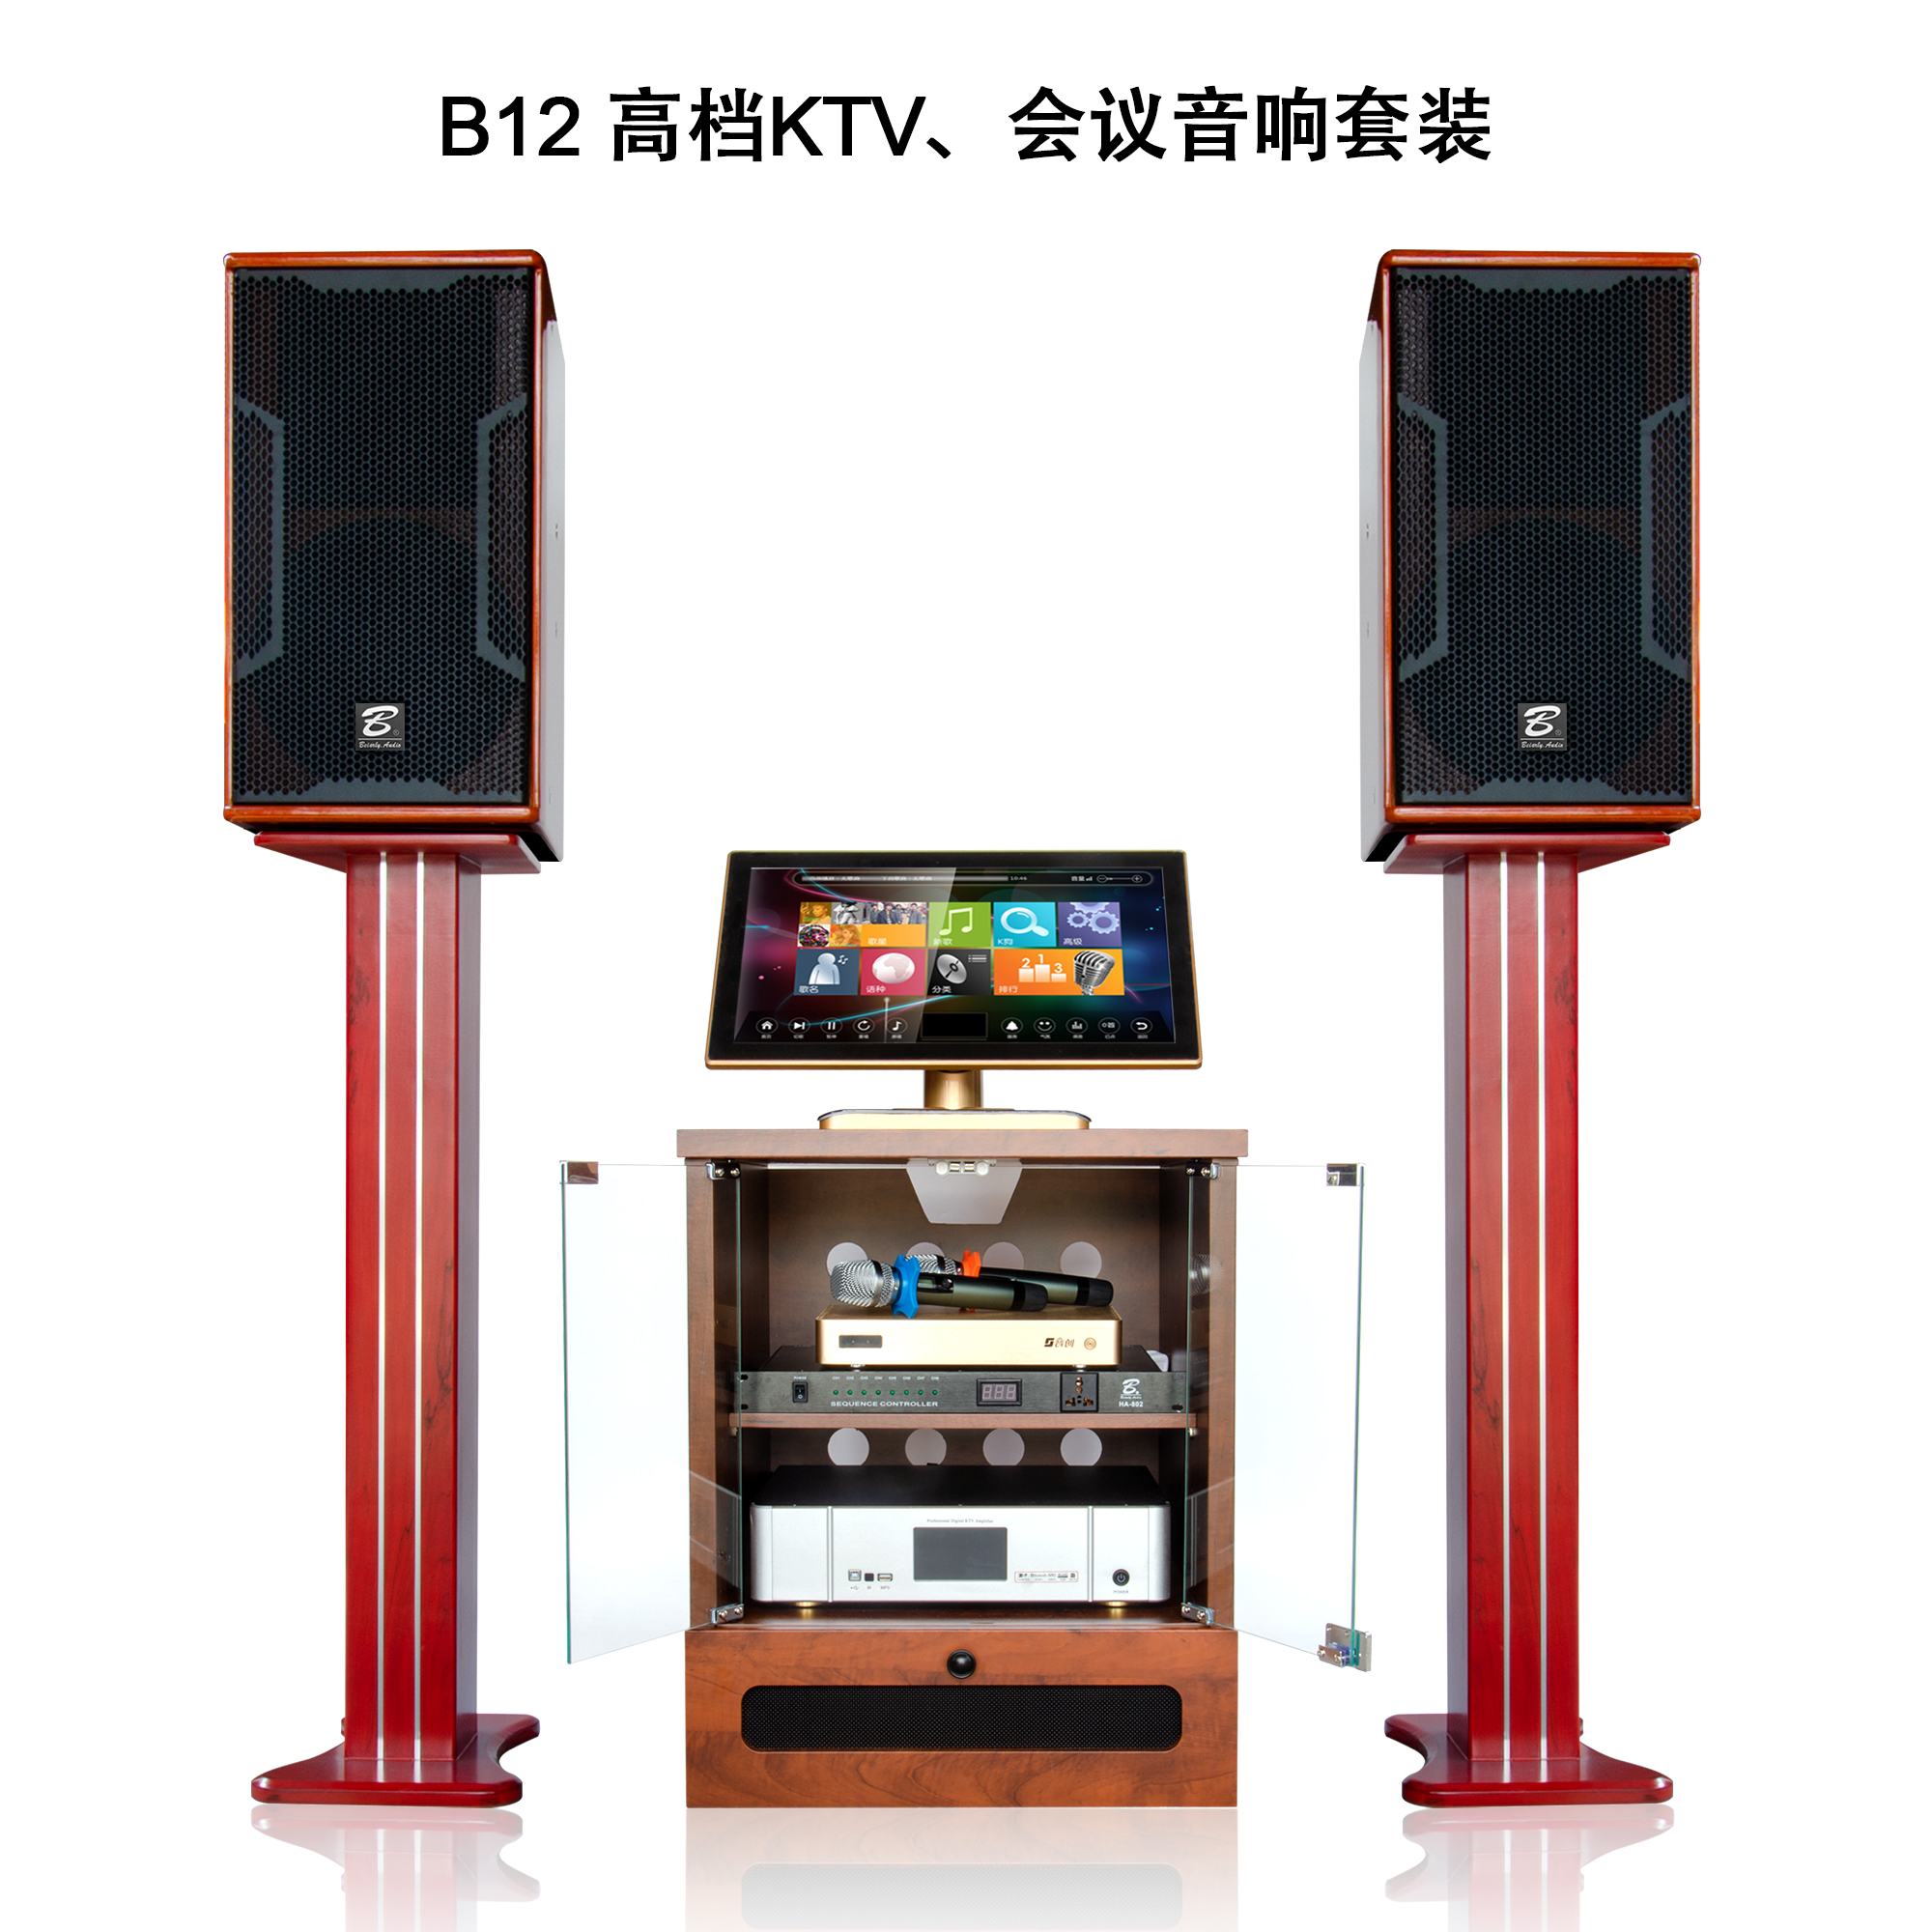 B12 KTV professional audio set